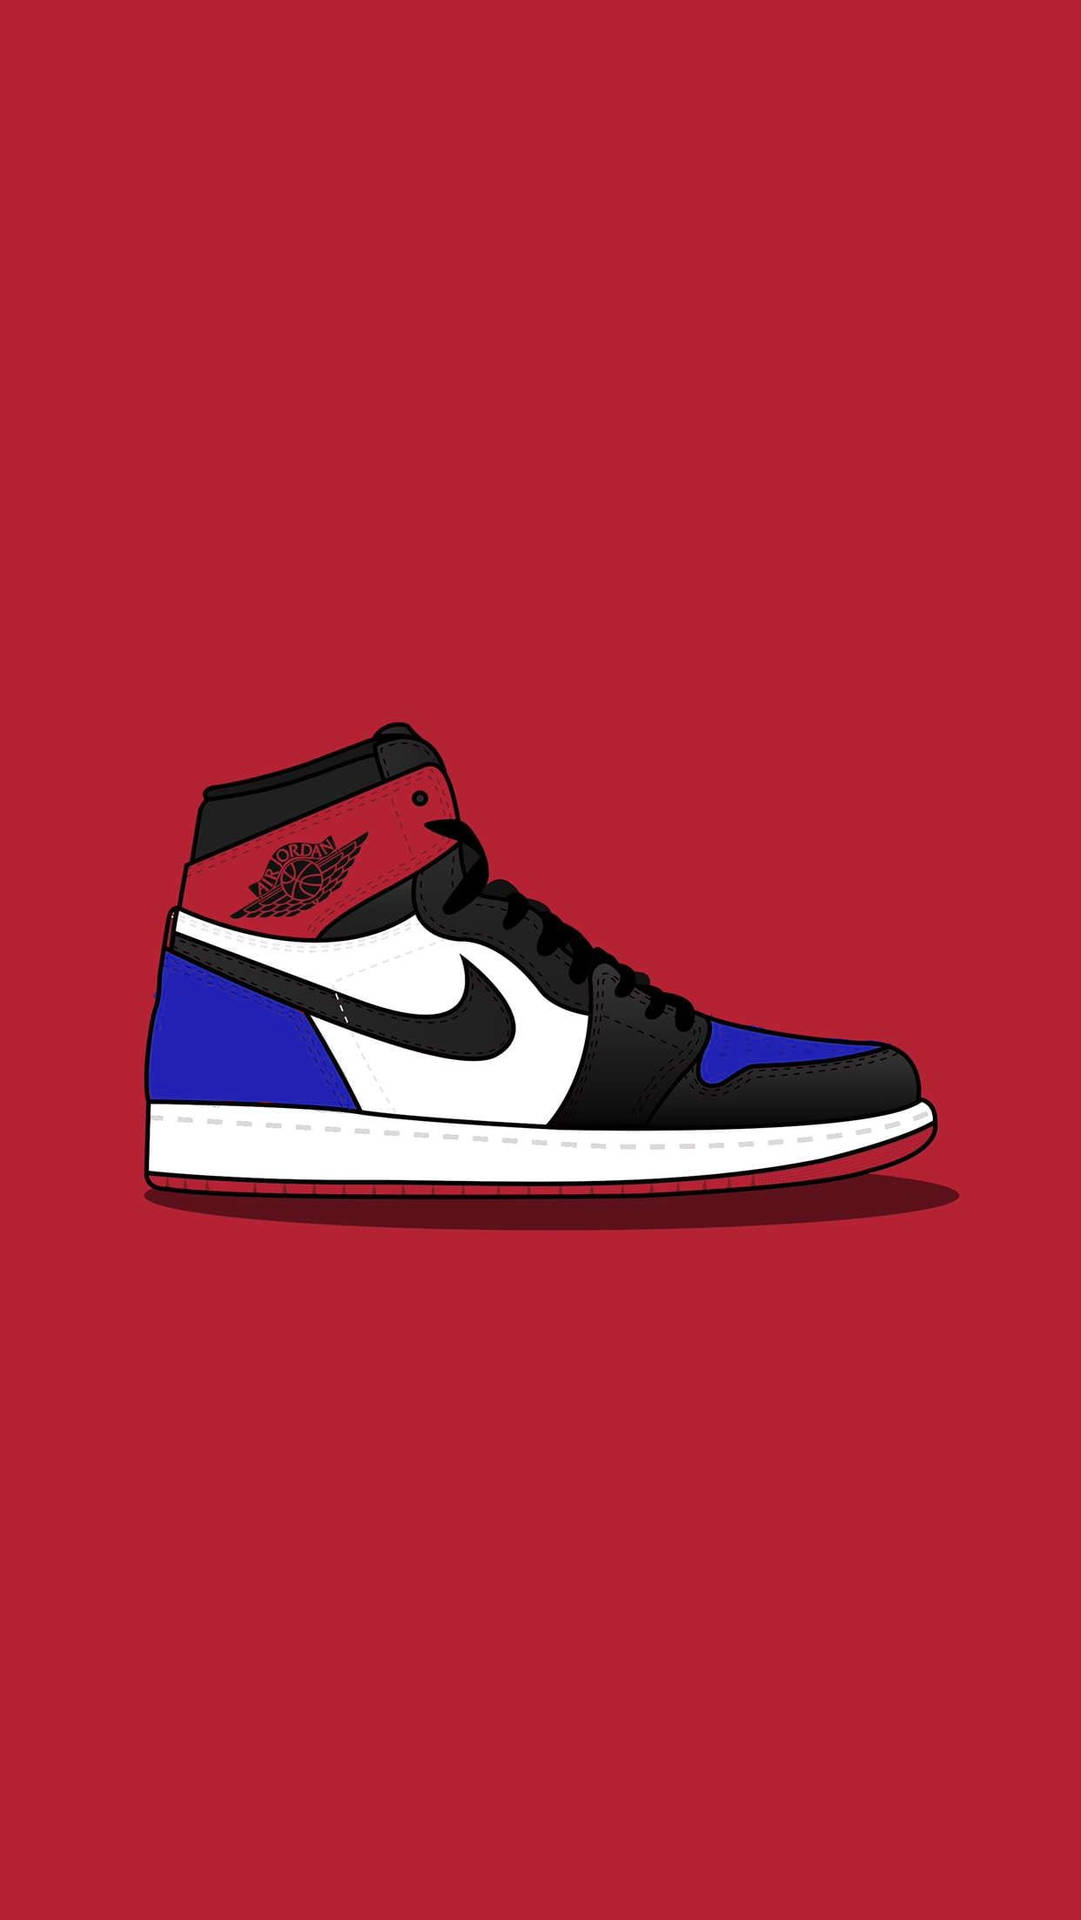 Retro High Cartoon Nike Shoes Wallpaper